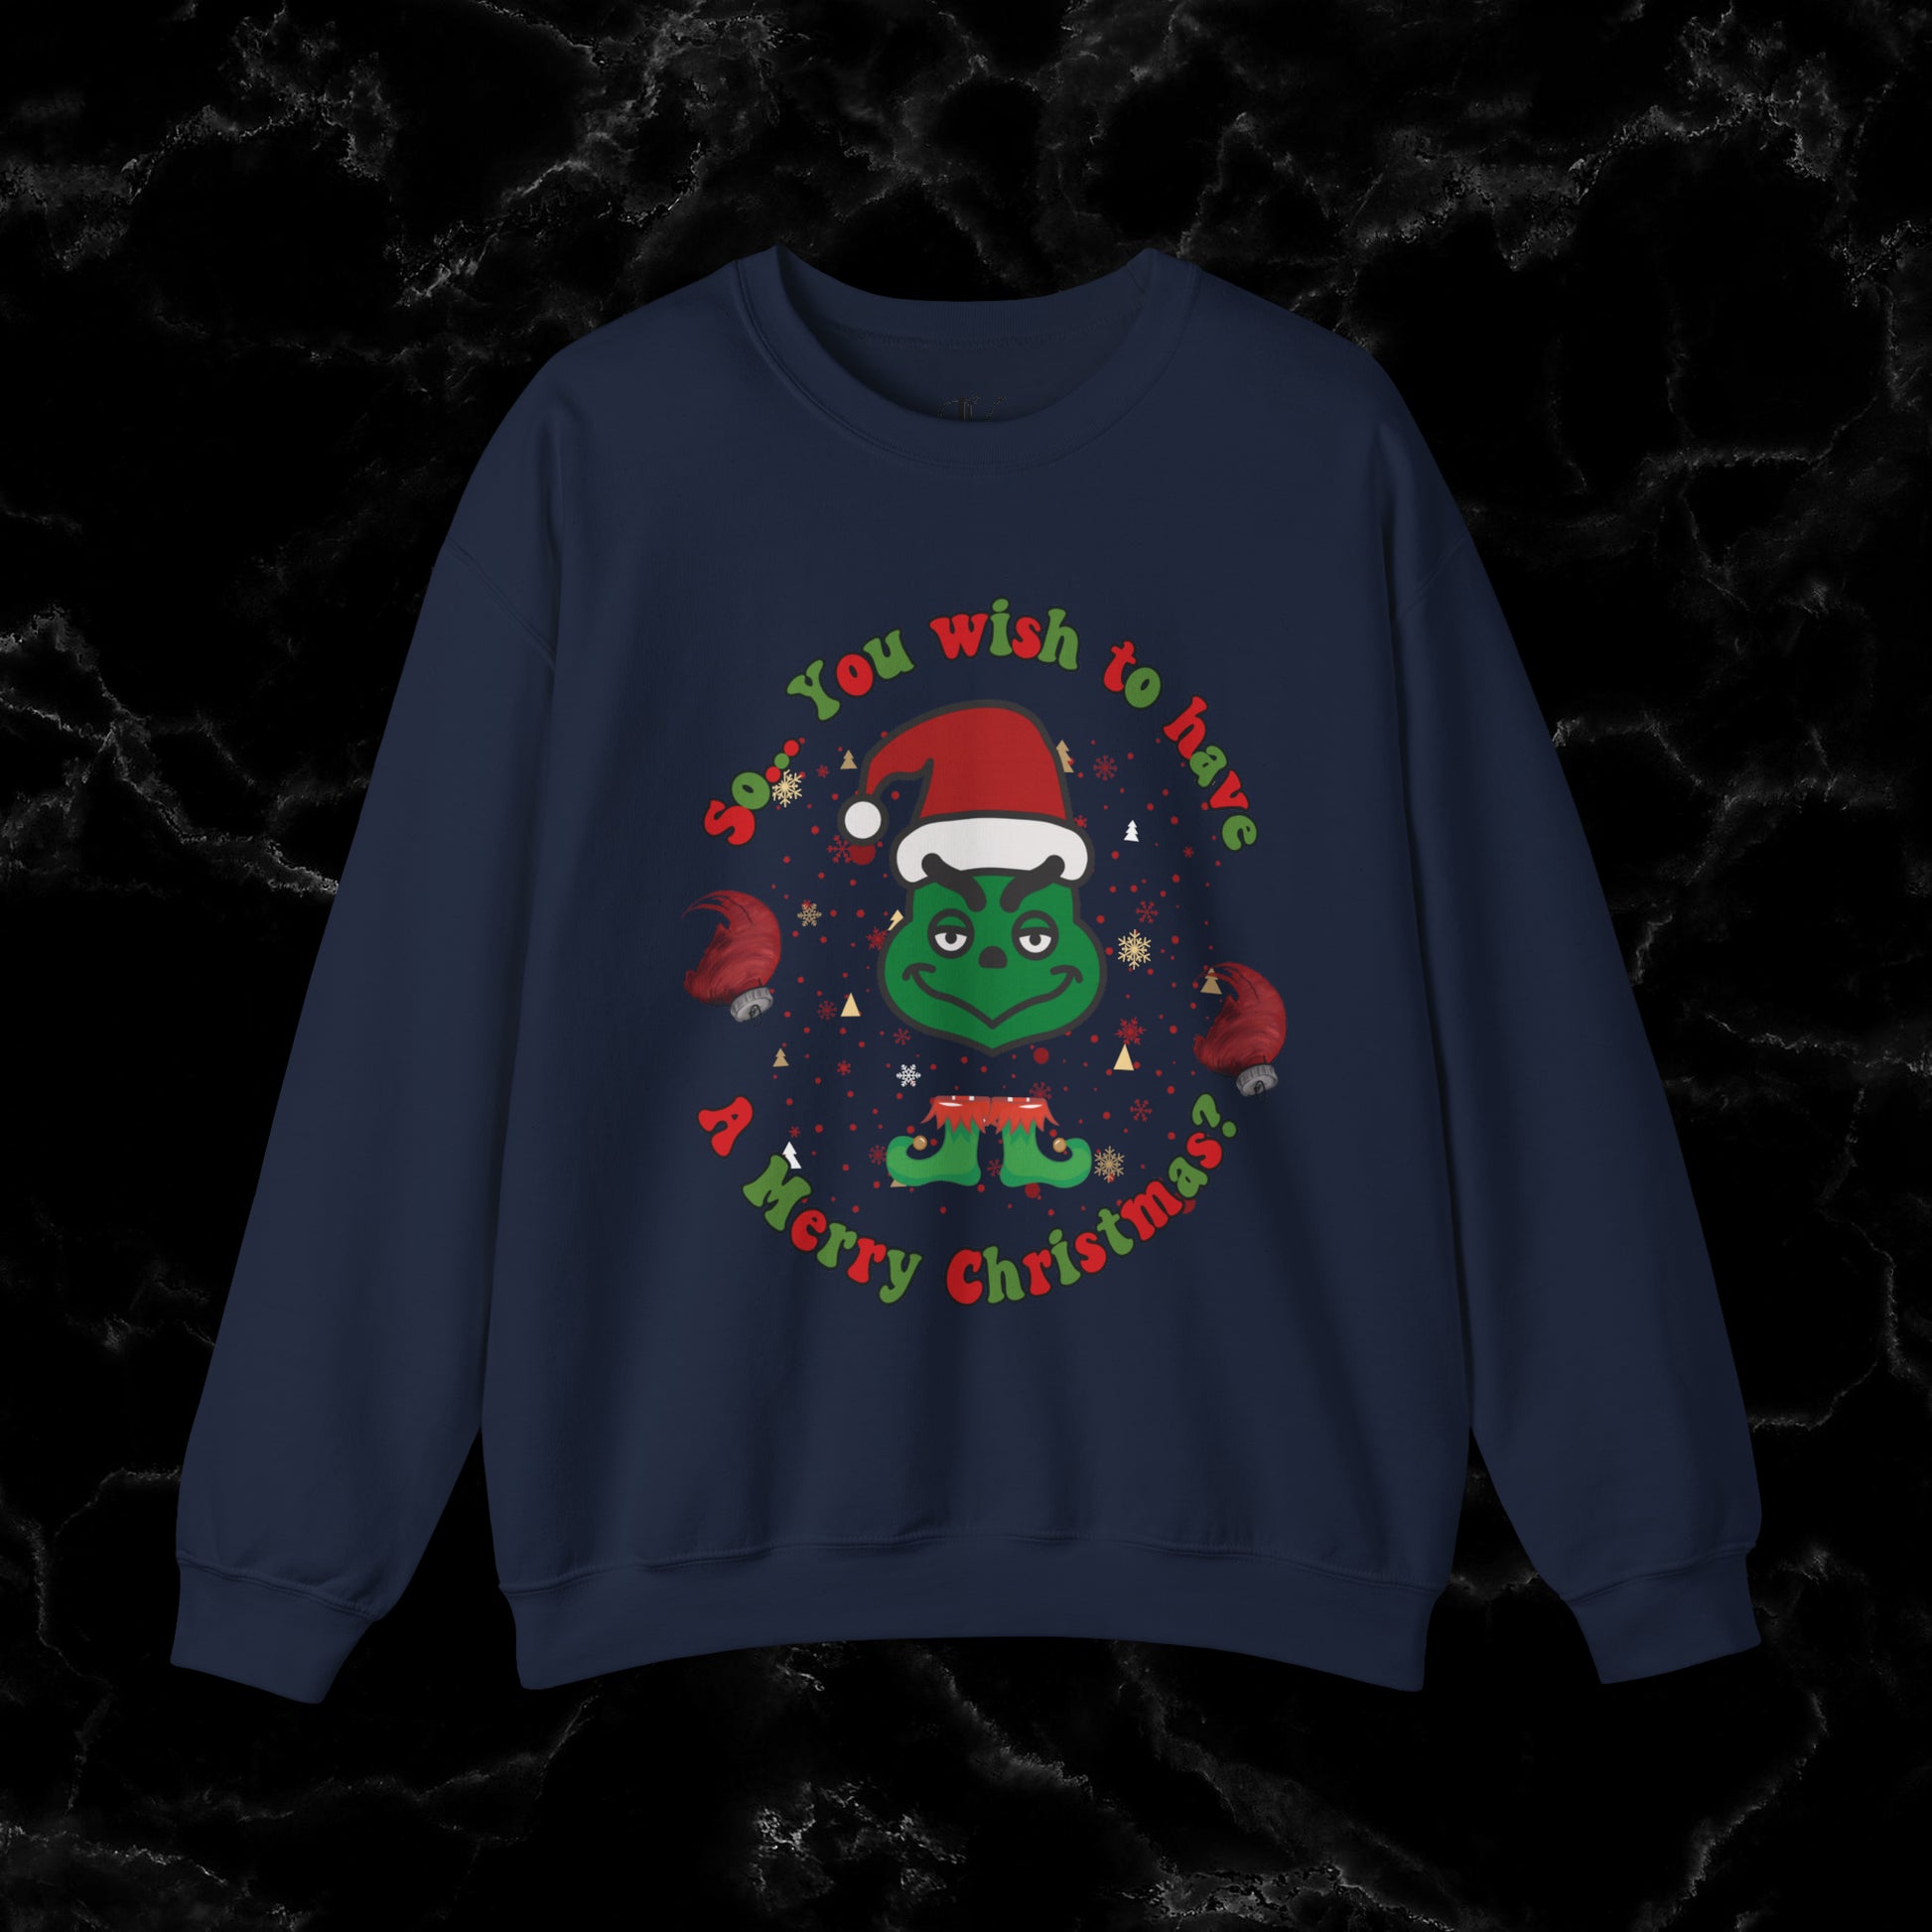 So You Wish To Have Merry Christmas Grinch Sweatshirt - Funny Grinchmas Gift Sweatshirt S Navy 